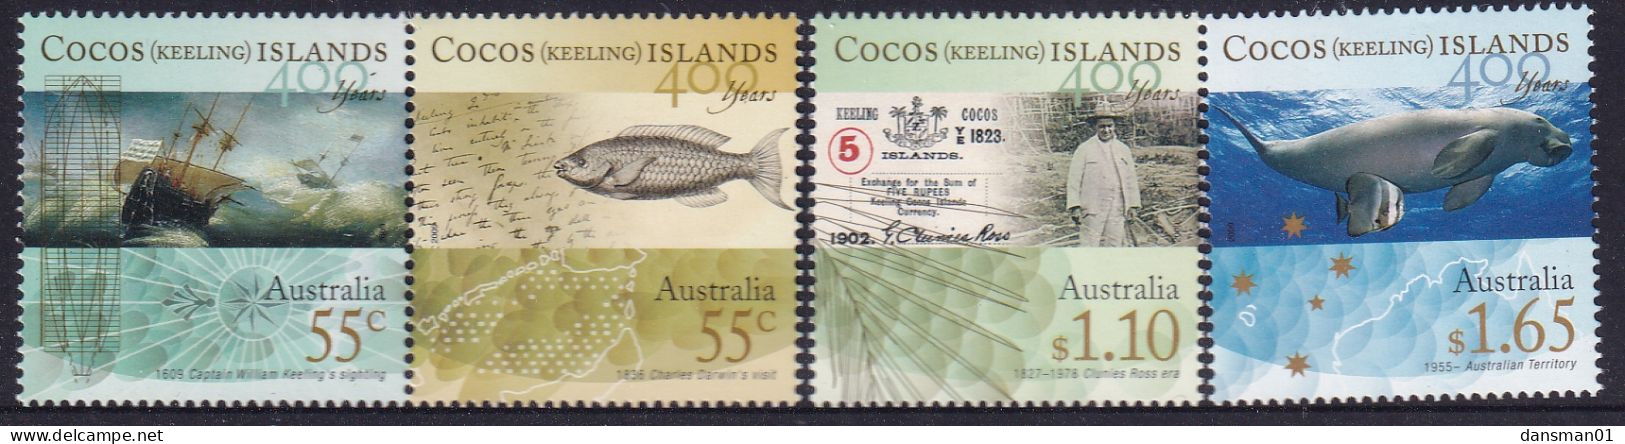 Cocos (Keeling) Islands 2009 History Of Cocos Sc 351-53 Mint Never Hinged - Cocos (Keeling) Islands